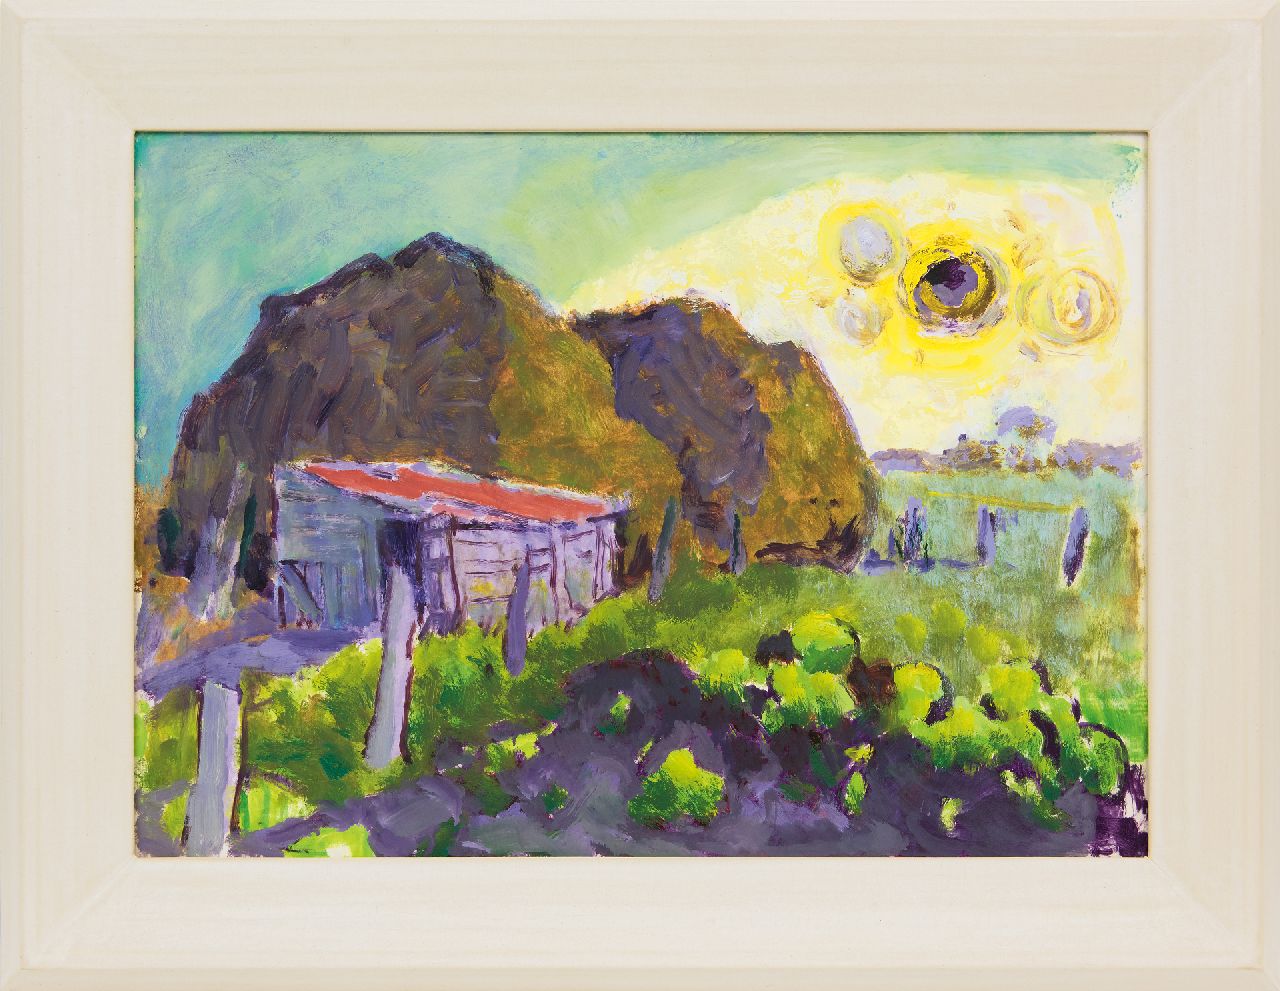 Altink J.  | Jan Altink, Farmyard in summer, oil on paper 48.2 x 67.2 cm